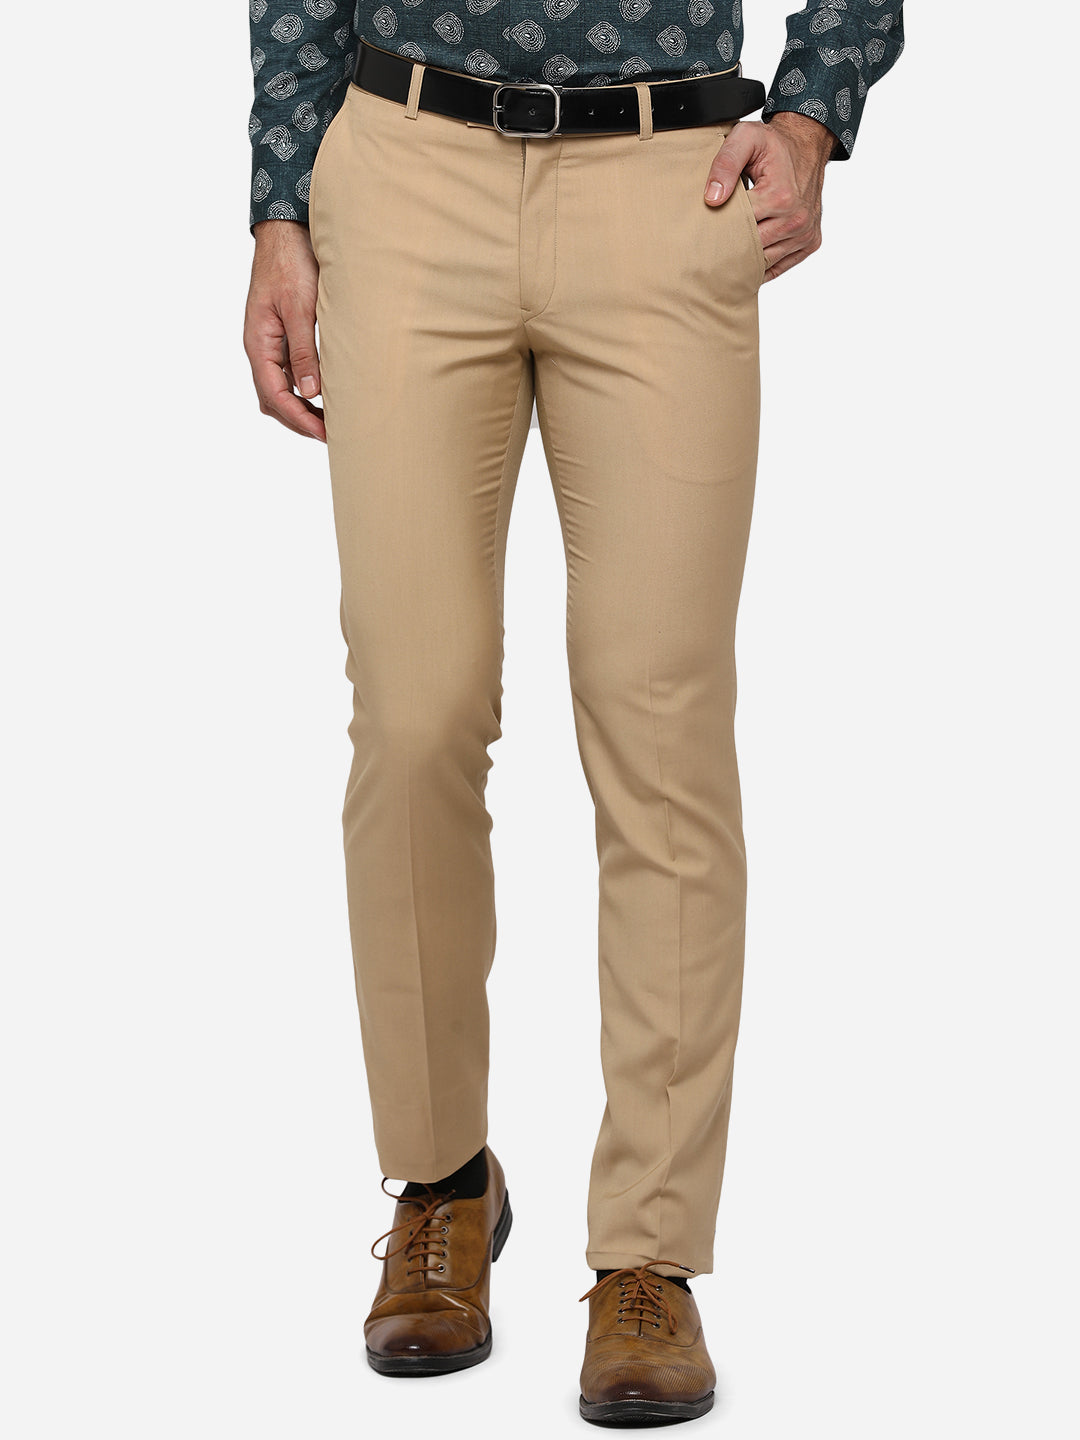 Men Formal Straight Fit Dress Pants Flat Front Slim Modern Business Trousers  | eBay